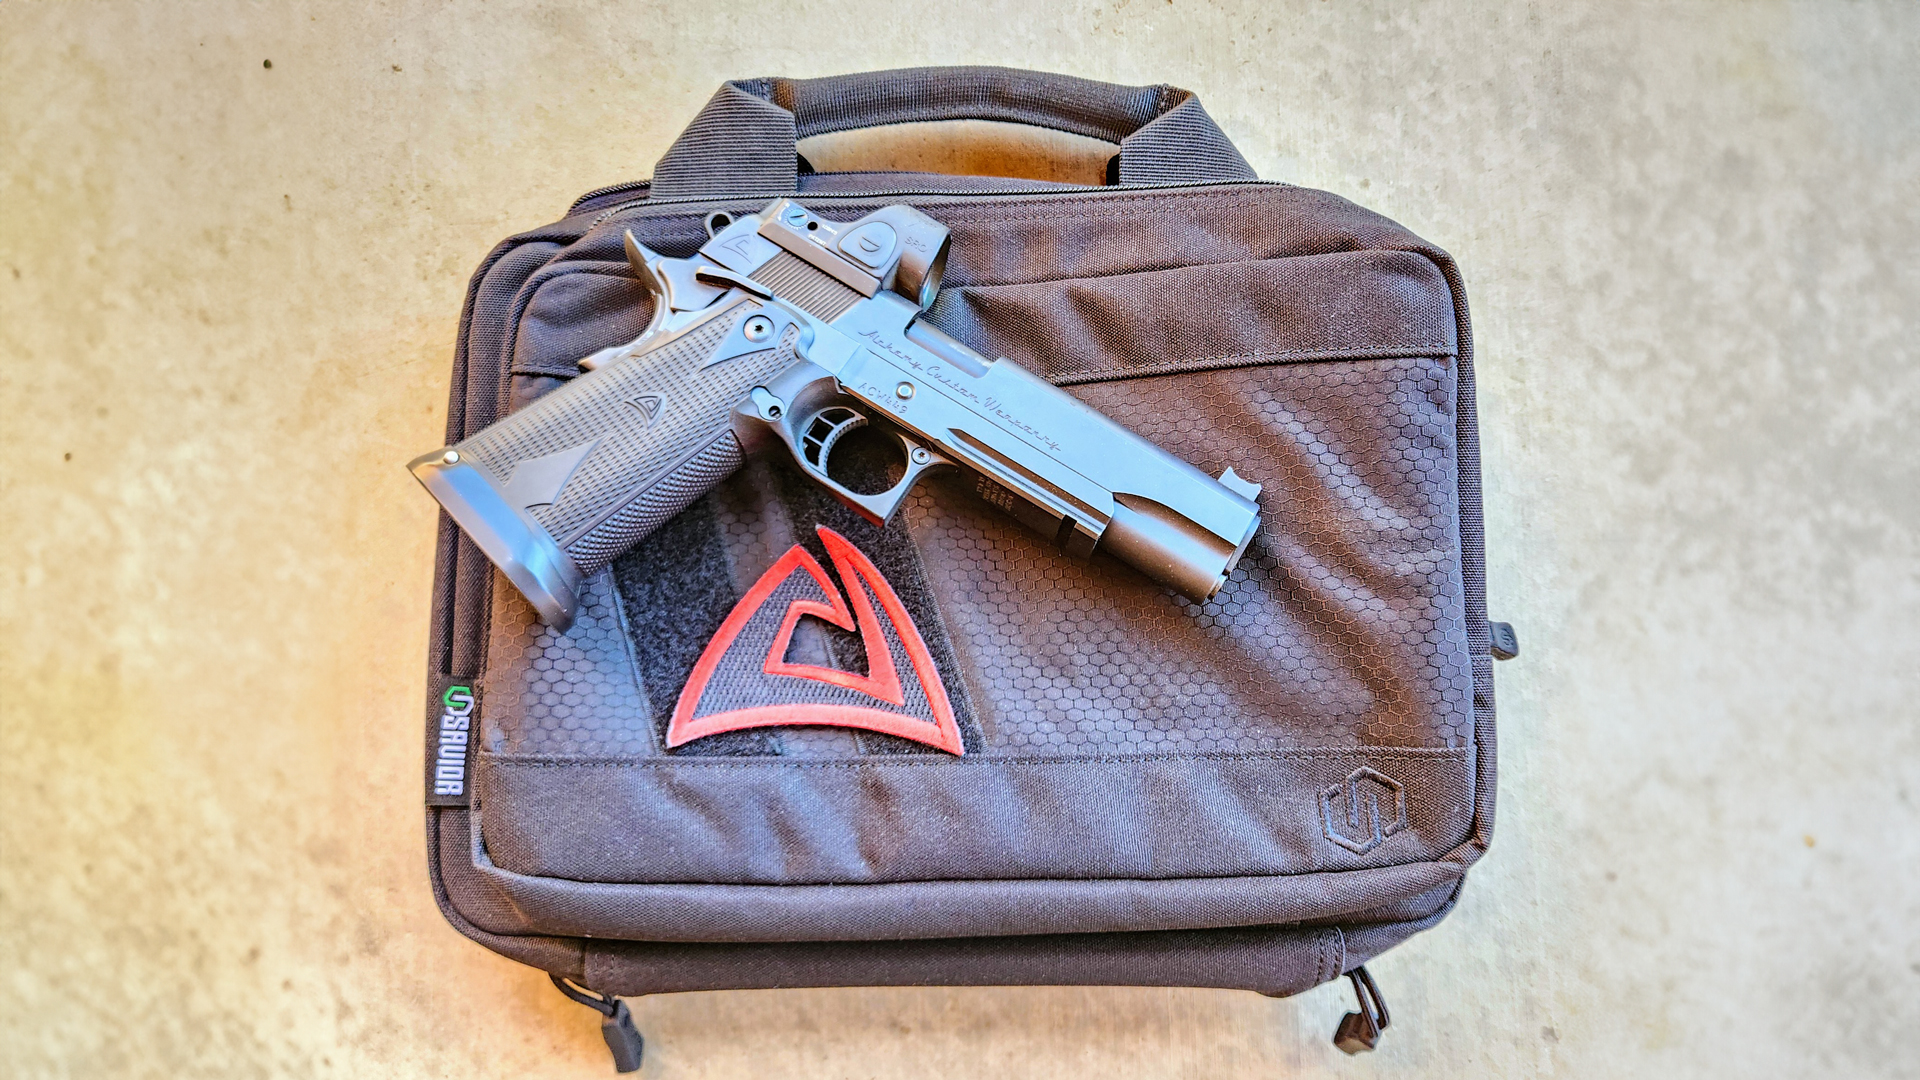 Alchemy Custom Weaponry Quantico HiCap pistol right-side view shown on Savior pistol handgun bag on concrete floor